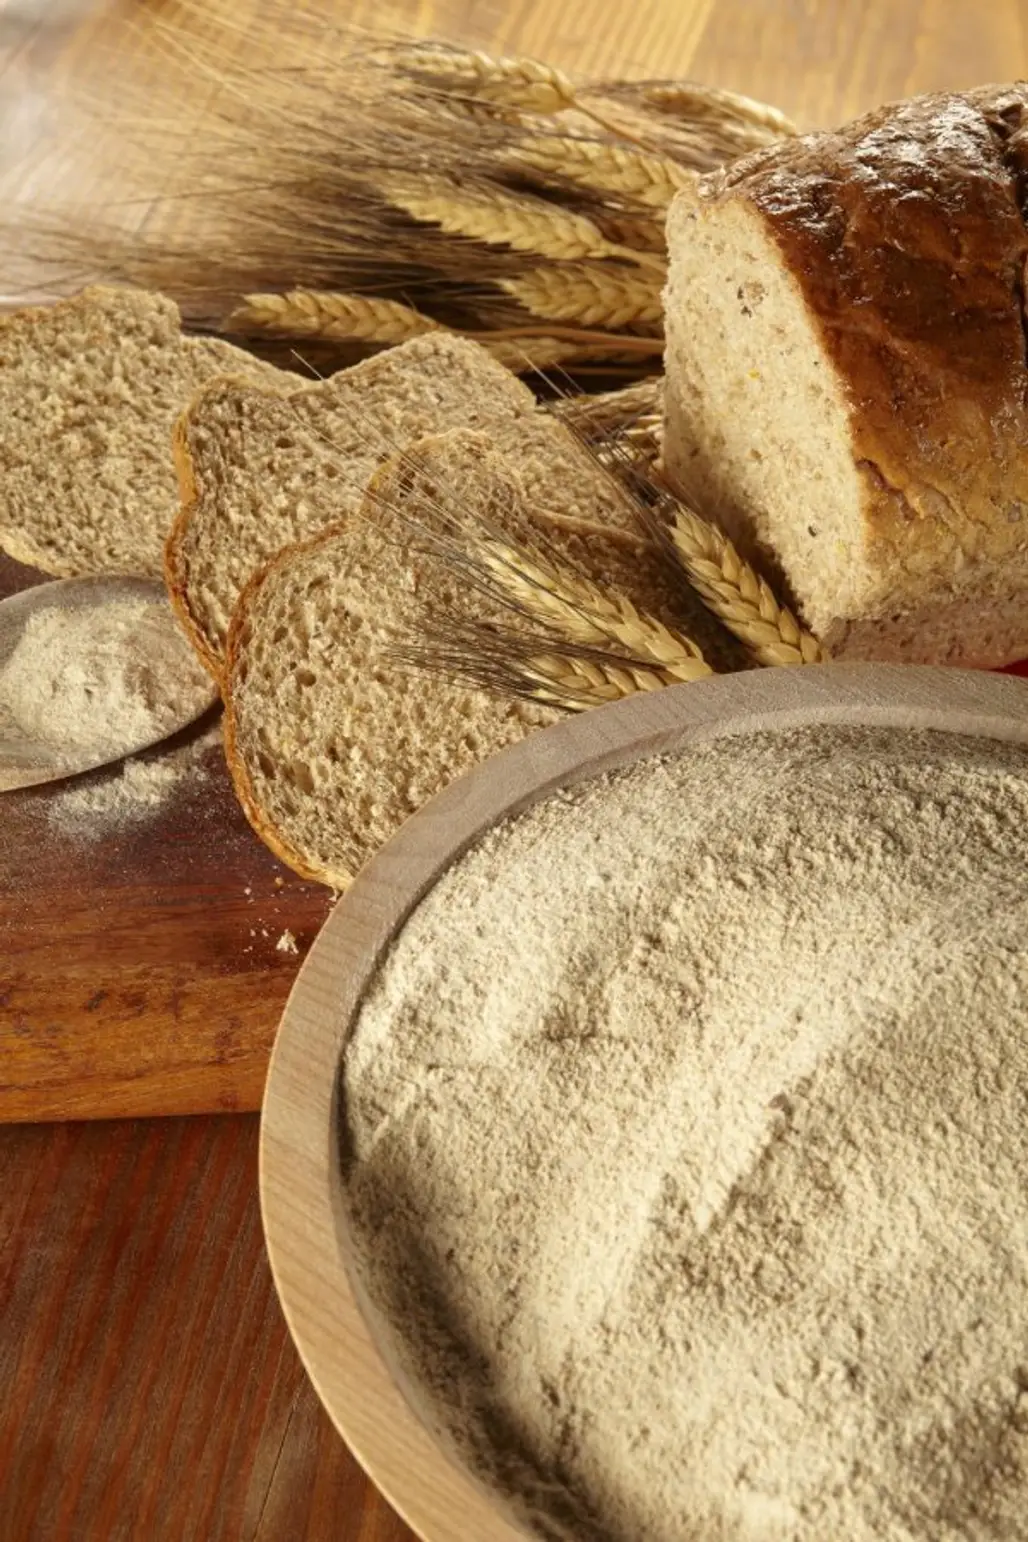 rye bread,food,grass family,bread,baked goods,